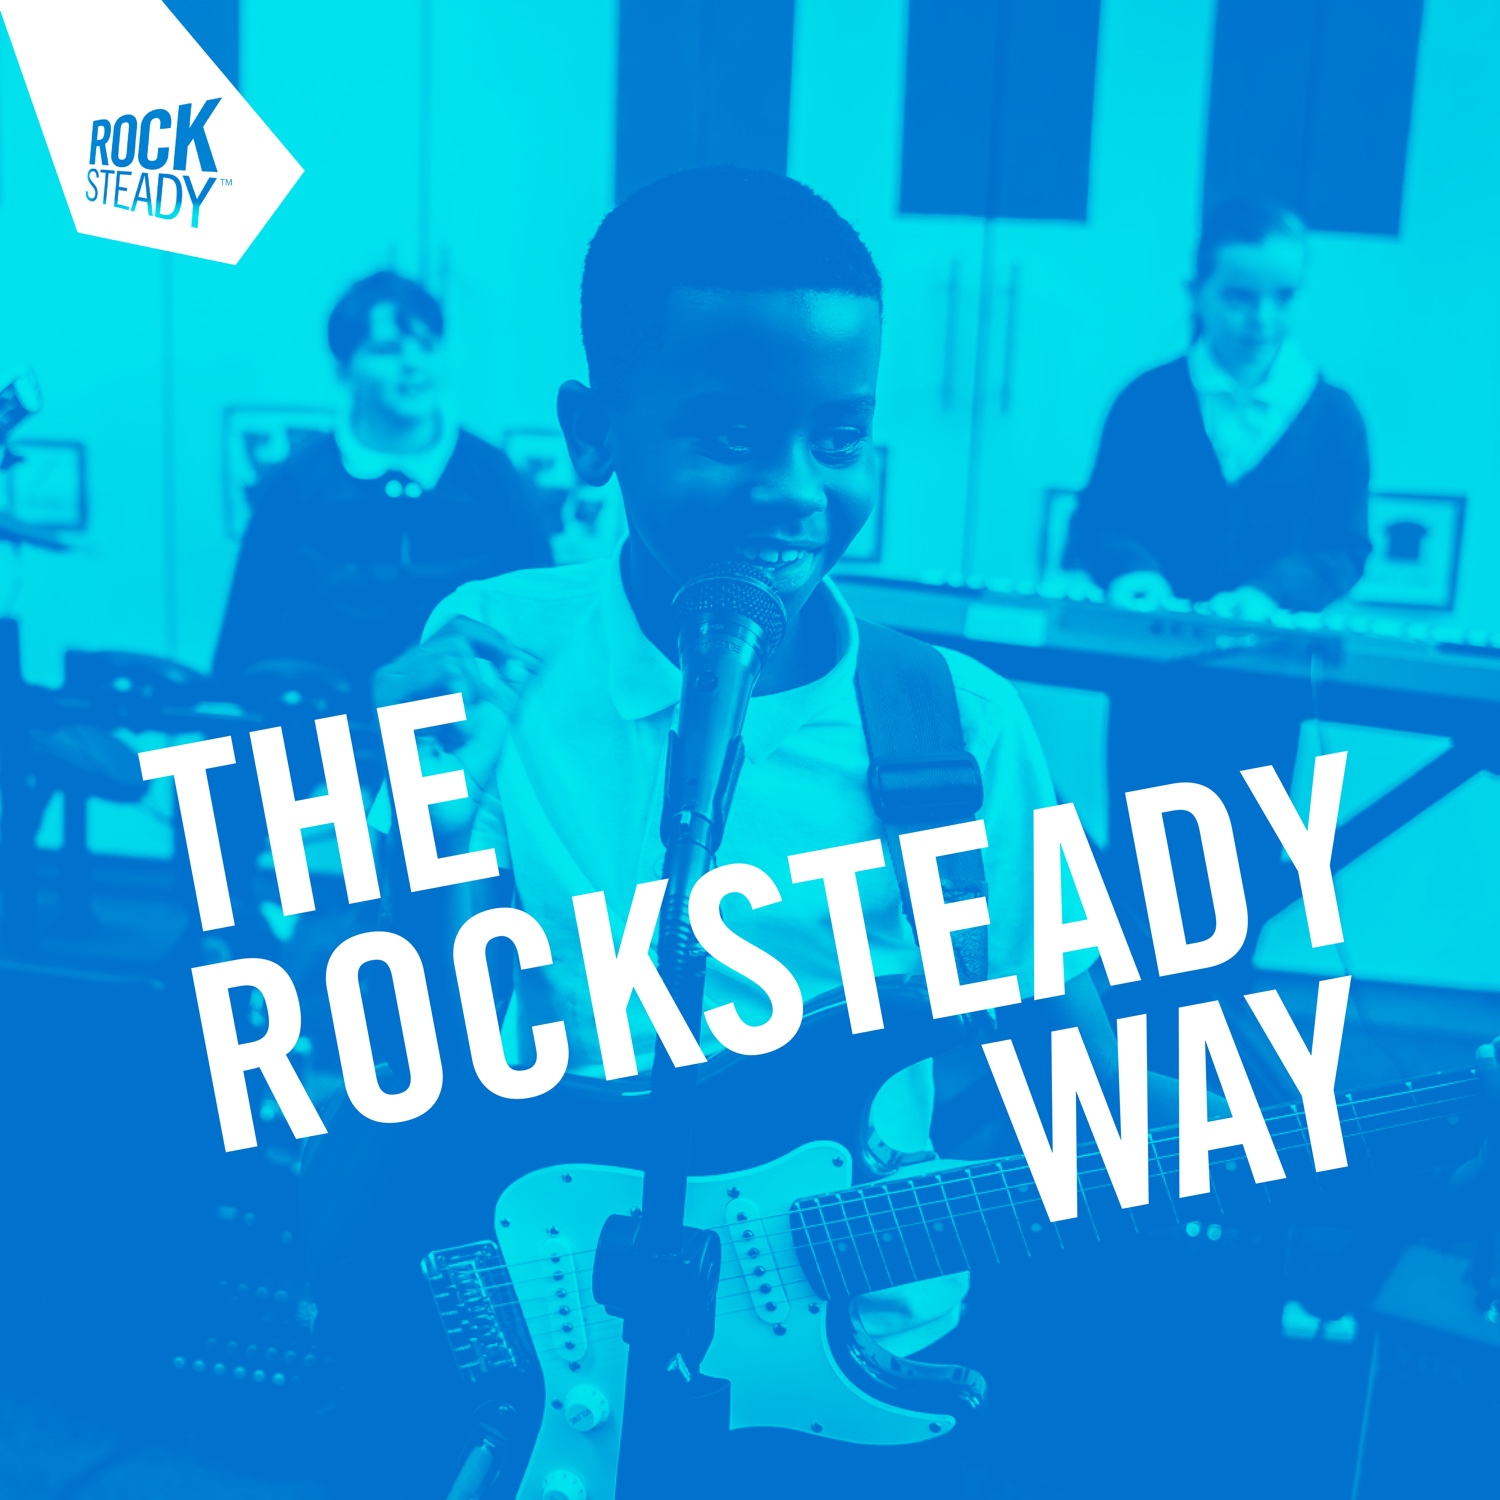 The Rocksteady Way